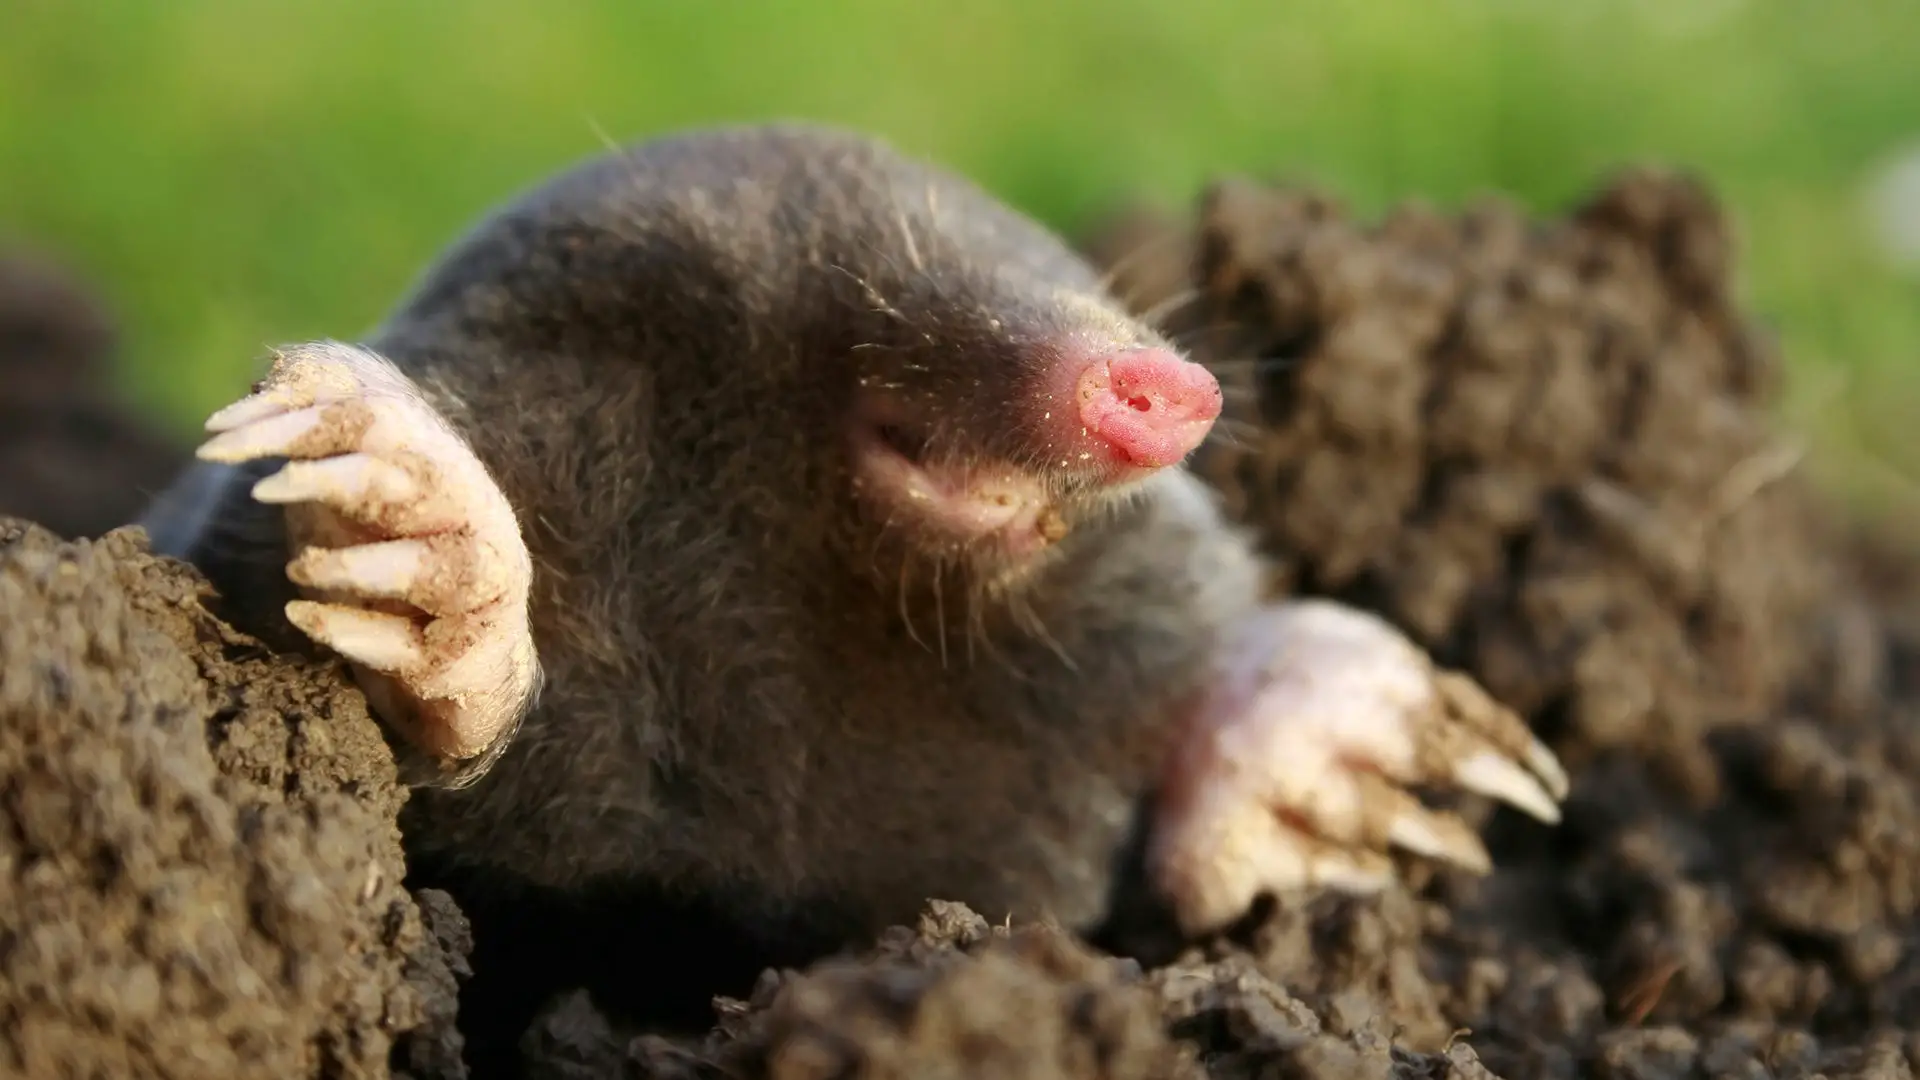 Do Moles And Mice Interact?